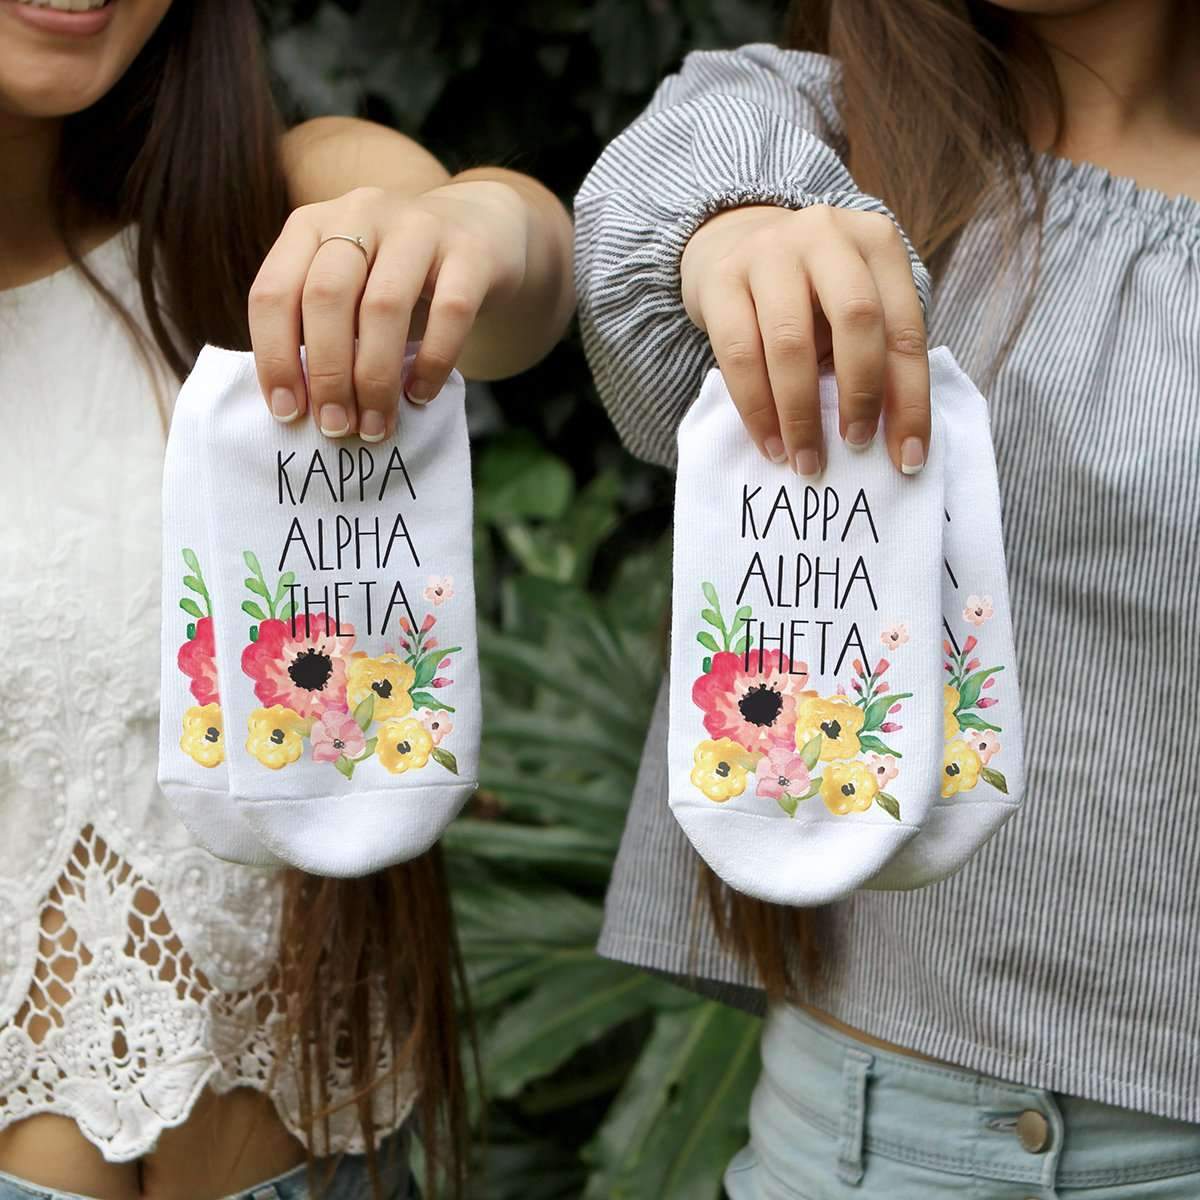 Kappa Alpha Theta sorority name and watercolor floral design custom printed on white cotton no show socks